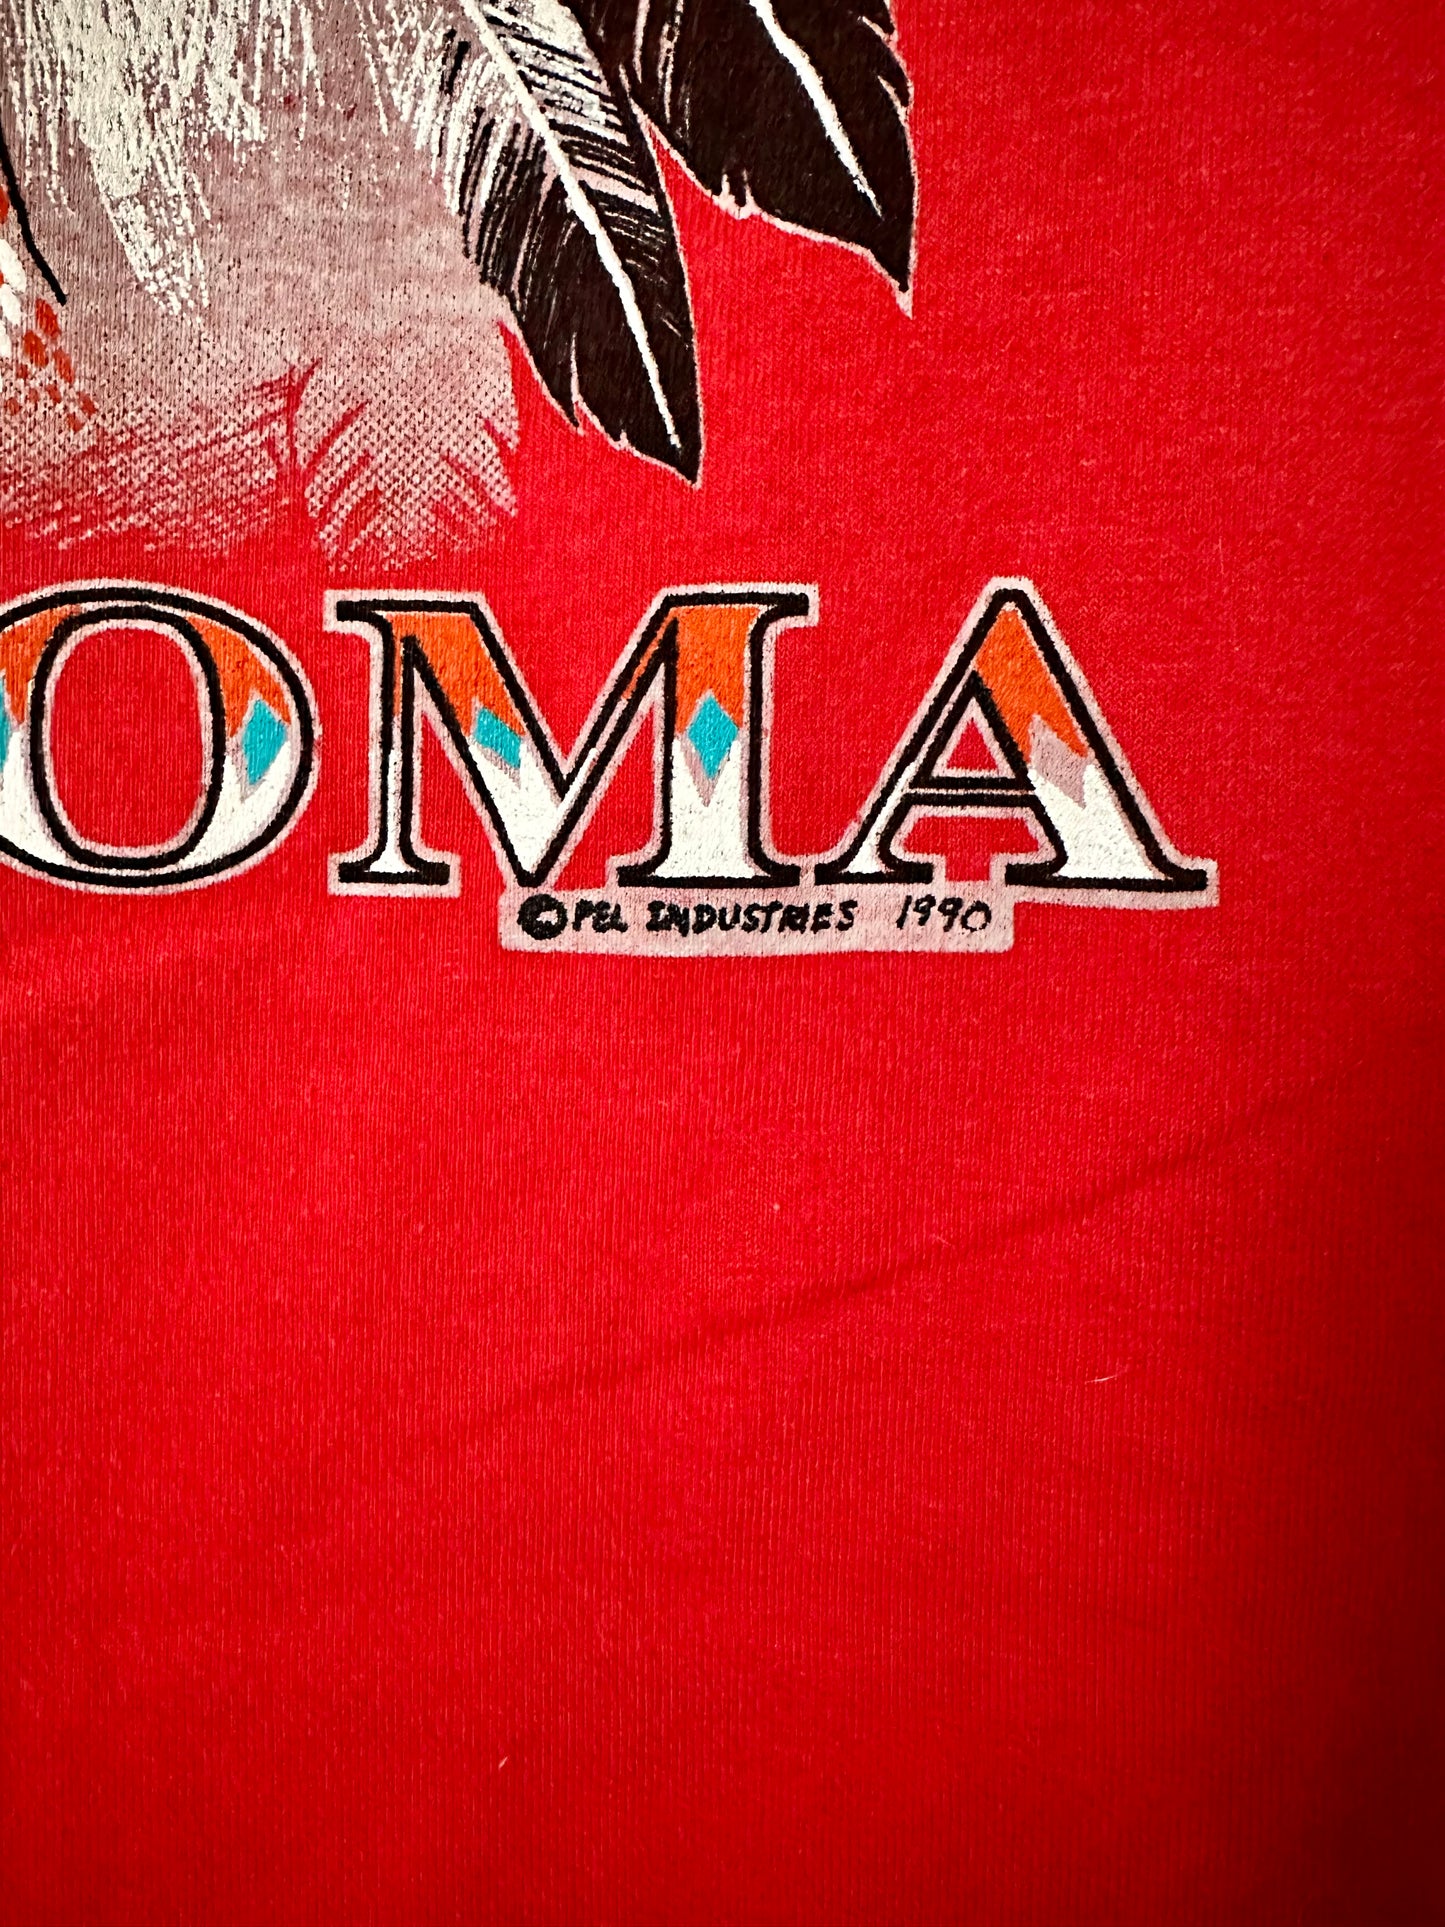 T-shirt vintage de l'Oklahoma